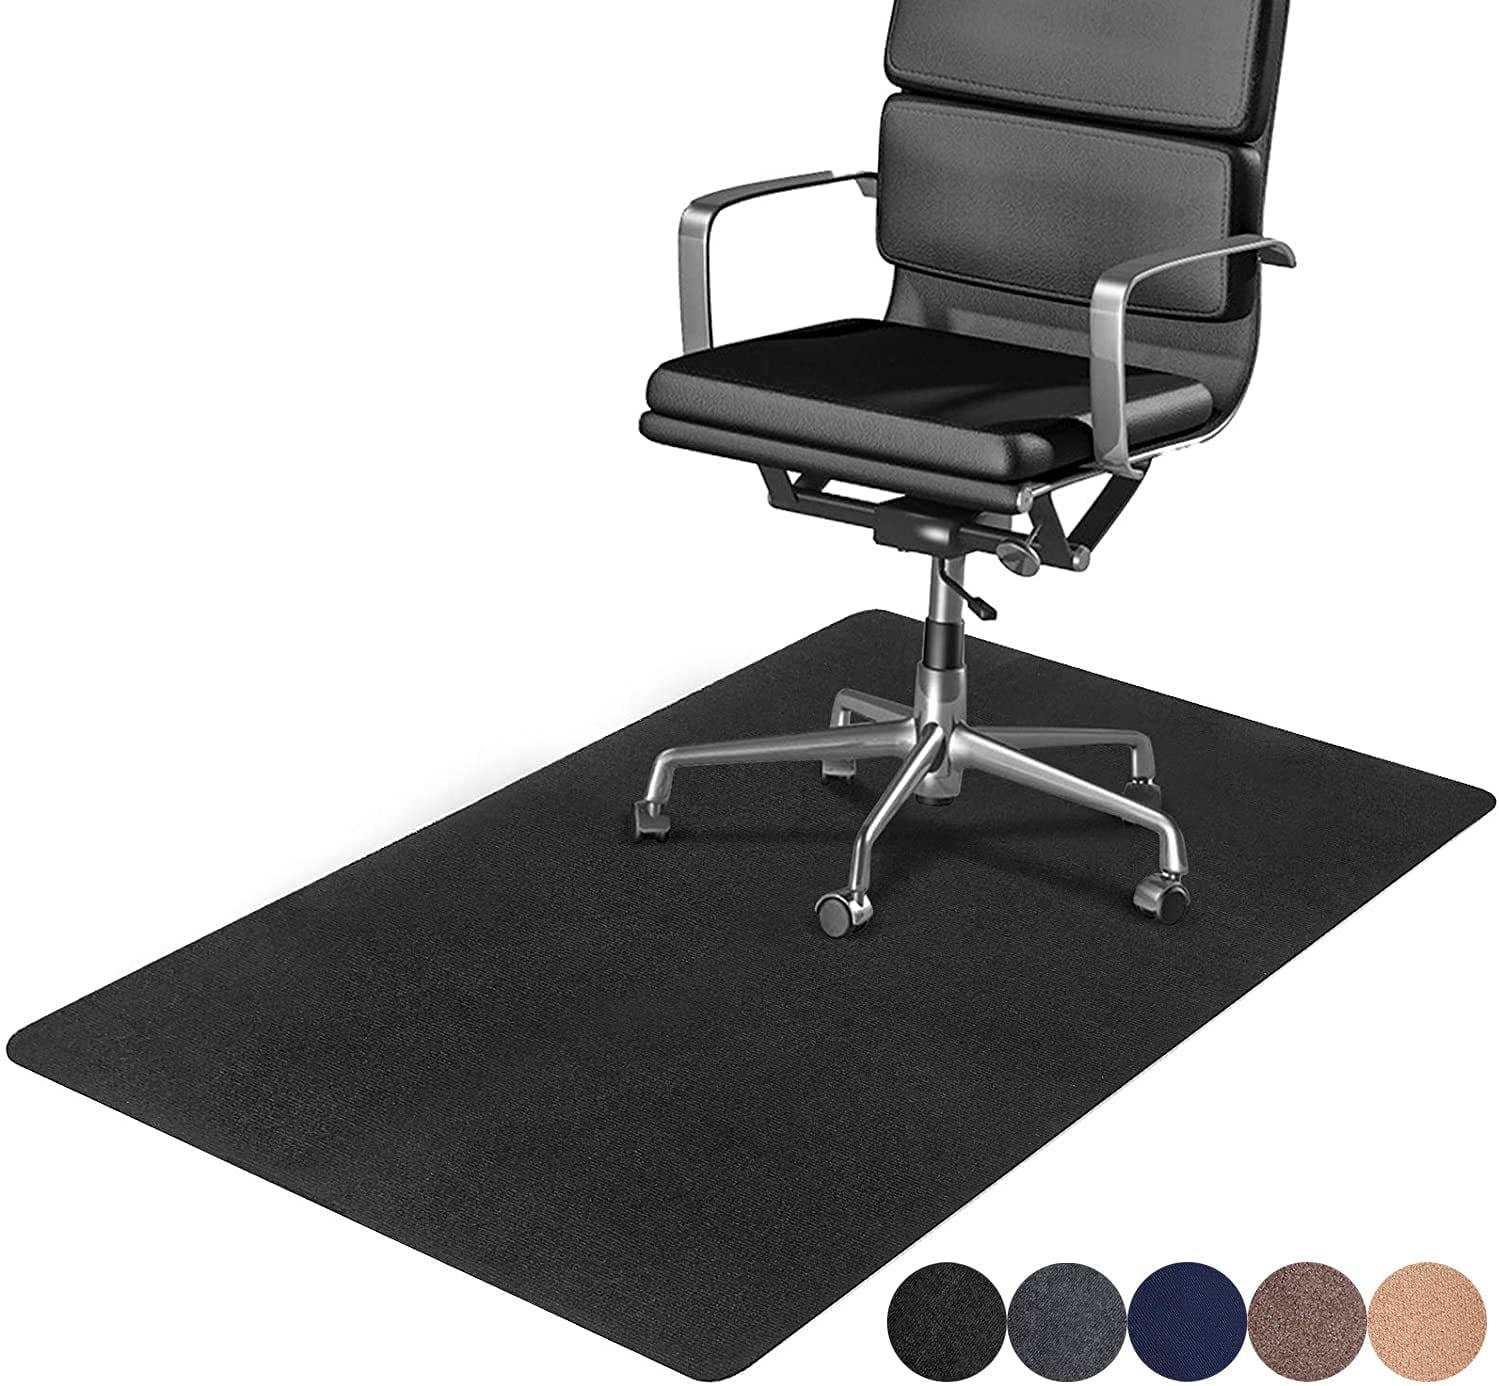 Rectangular Non-Slip Spiked Office Chair Mat Carpet Floor Protector PVC 48"x36" 